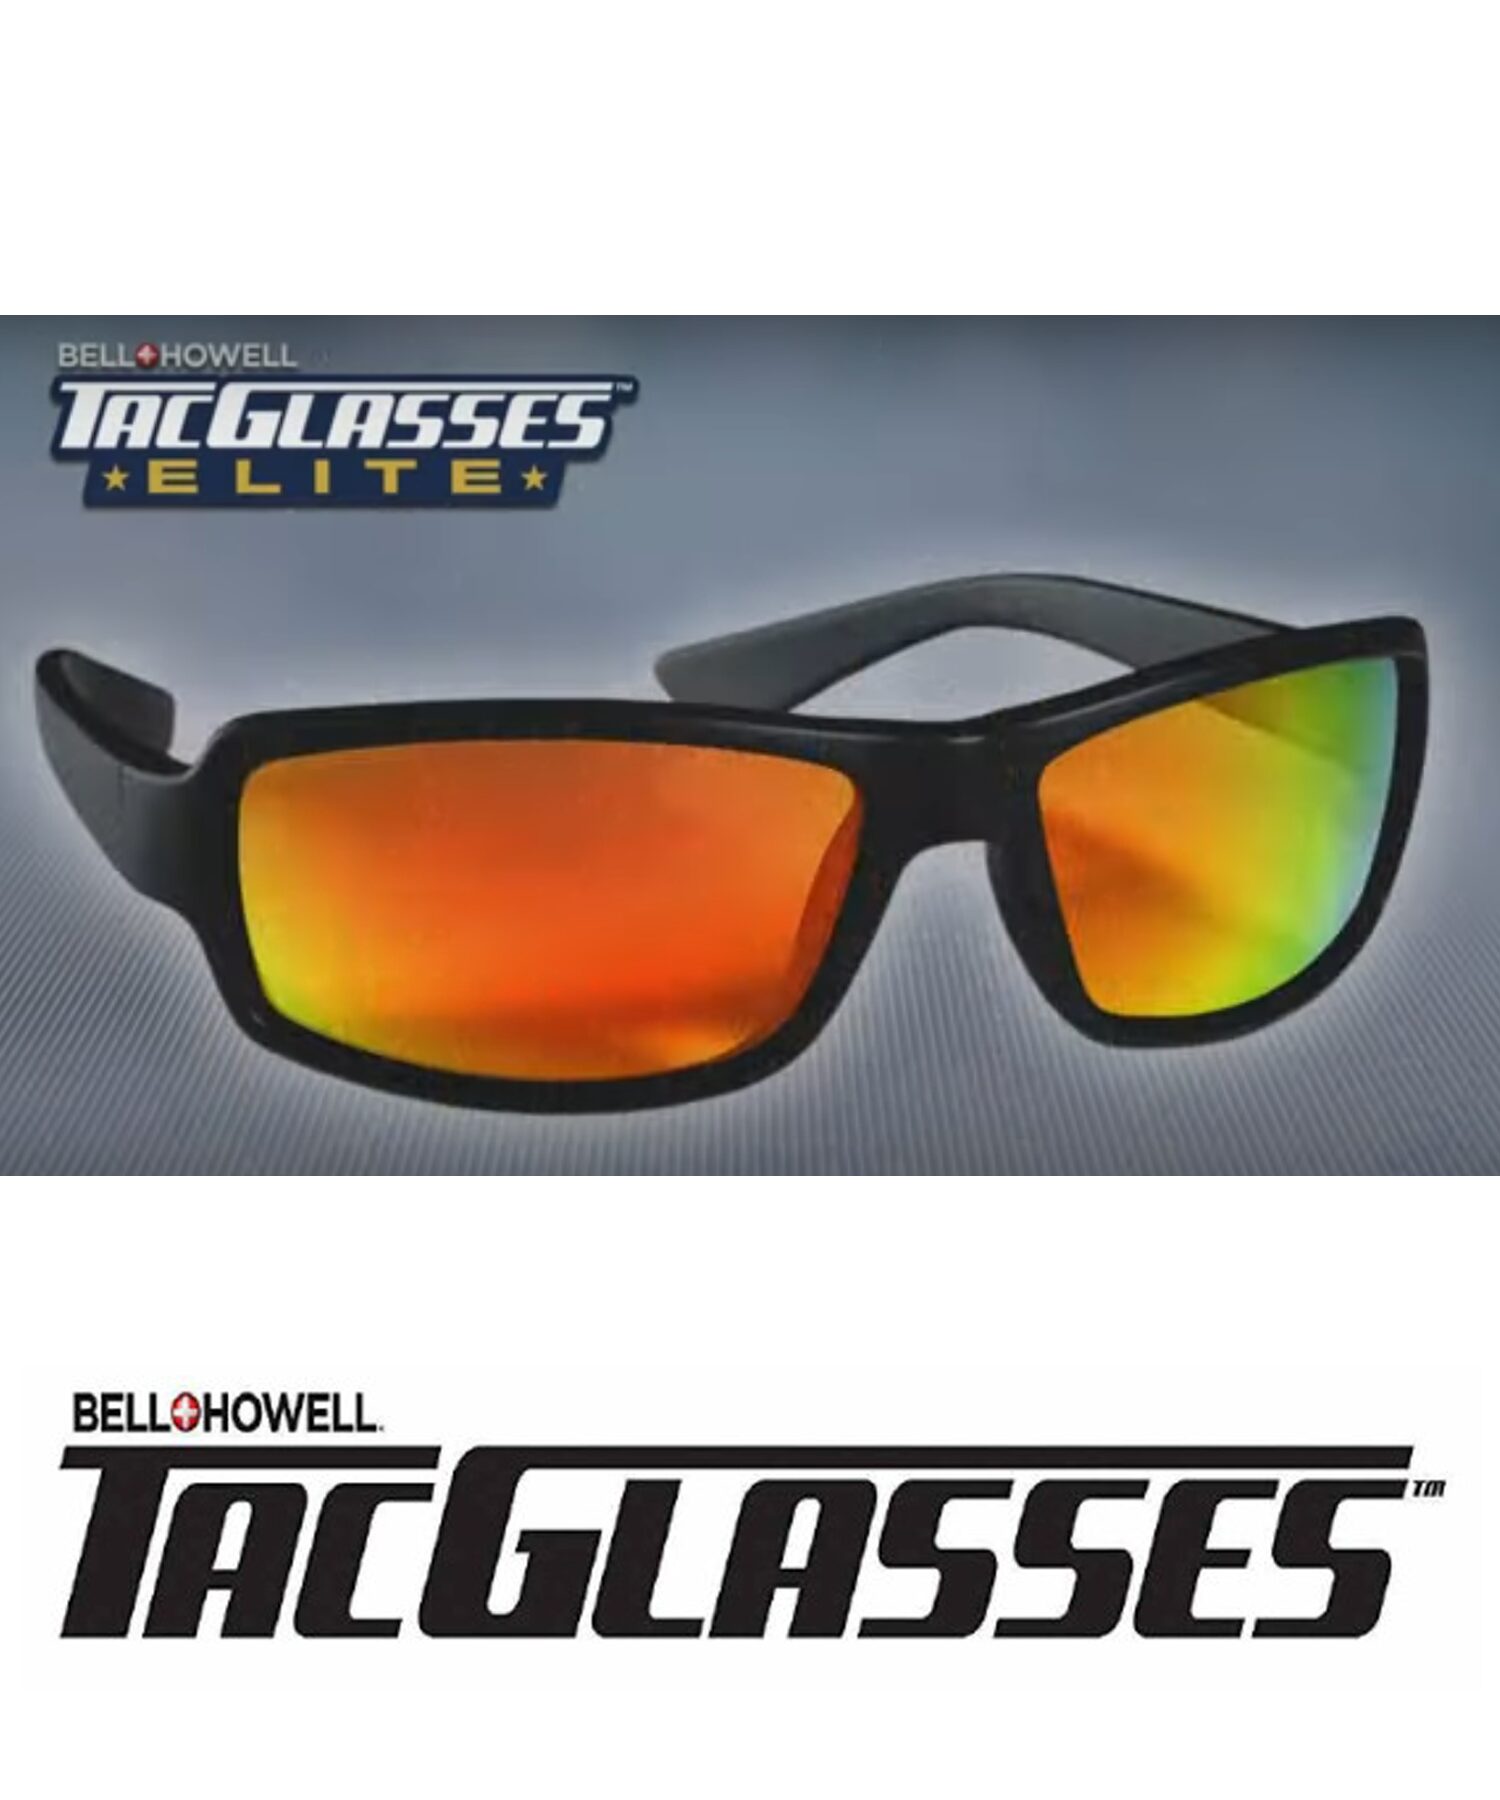 TacGlasses Elite